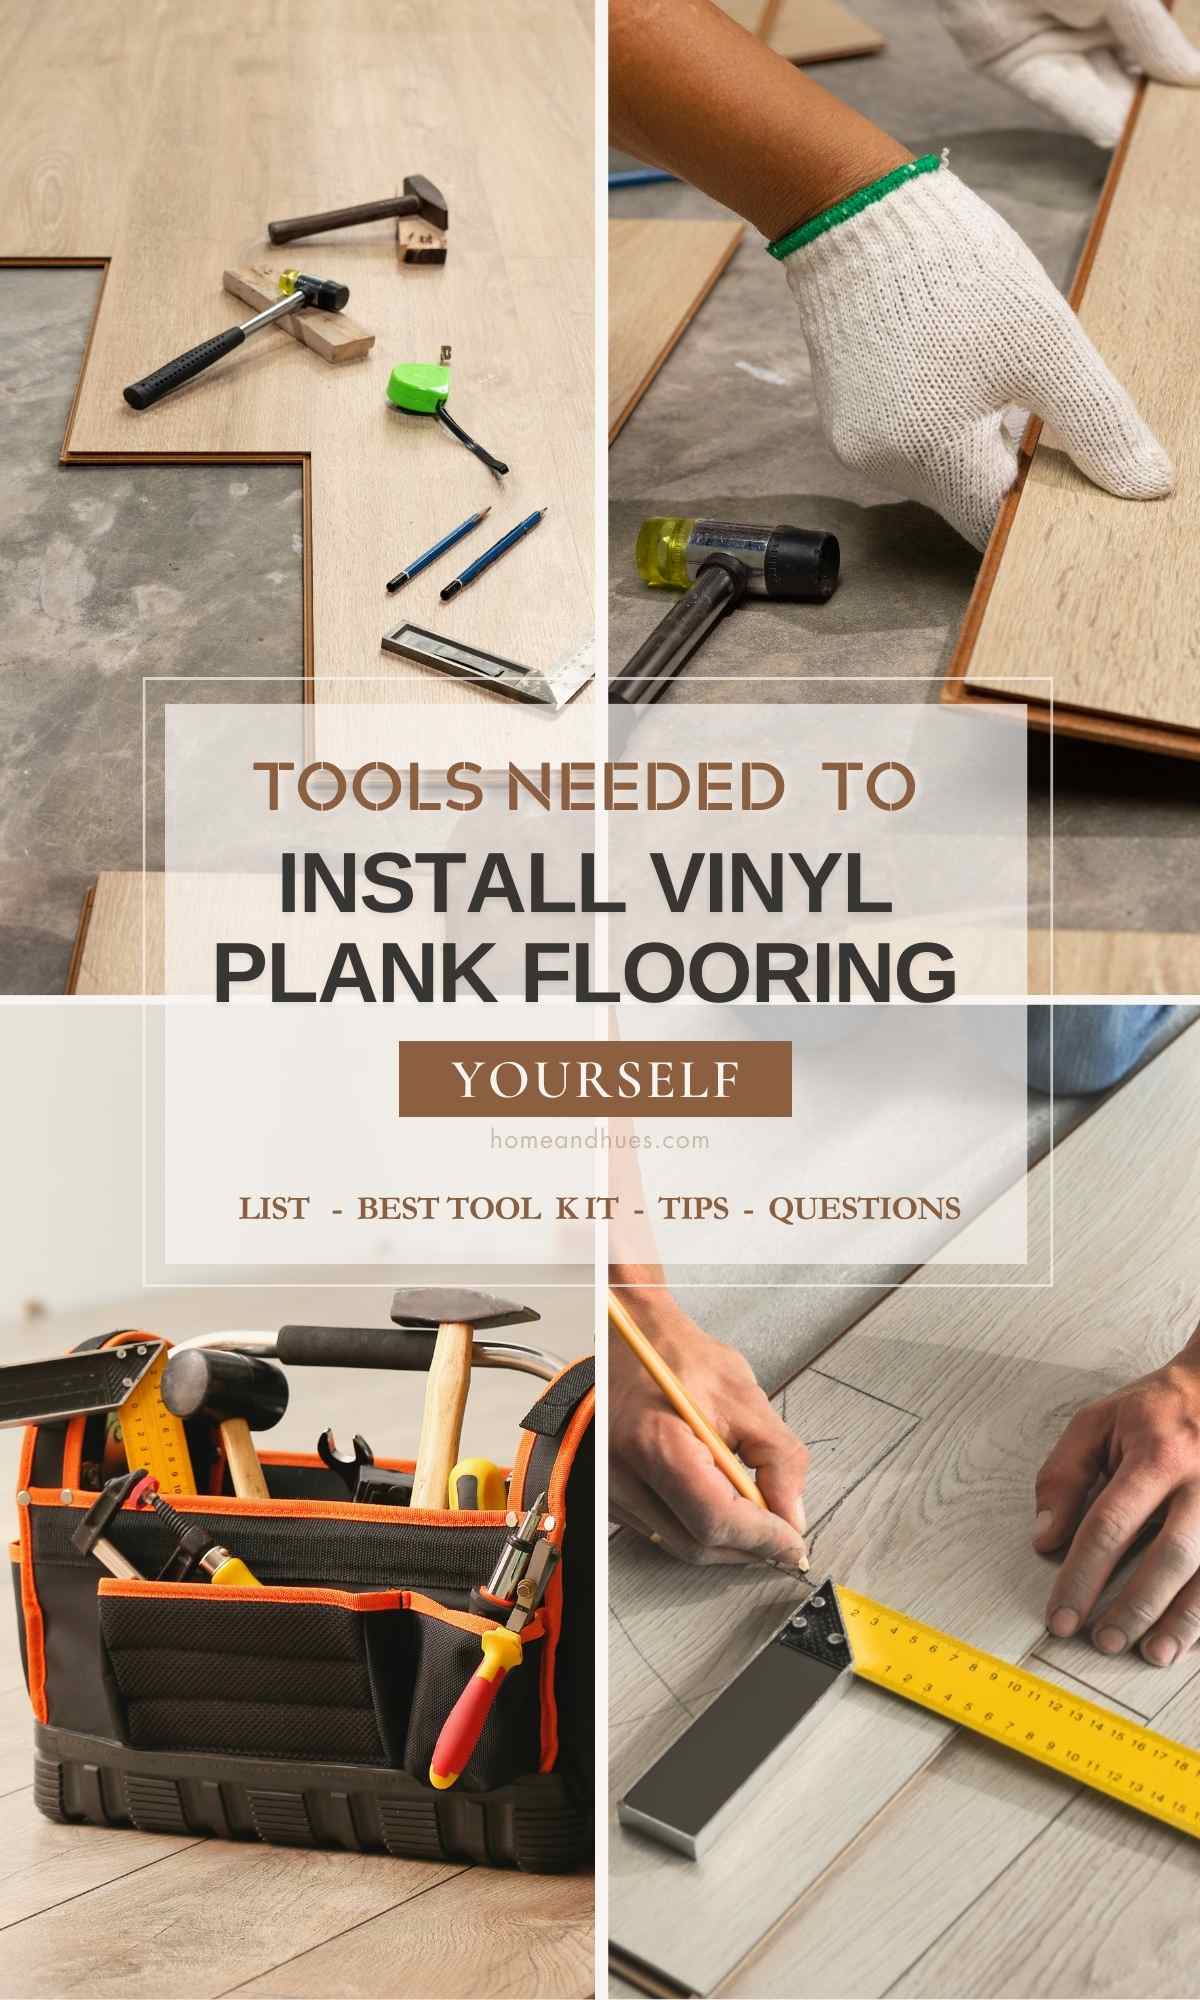 Tools needed to install vinyl plank flooring for pinterest.